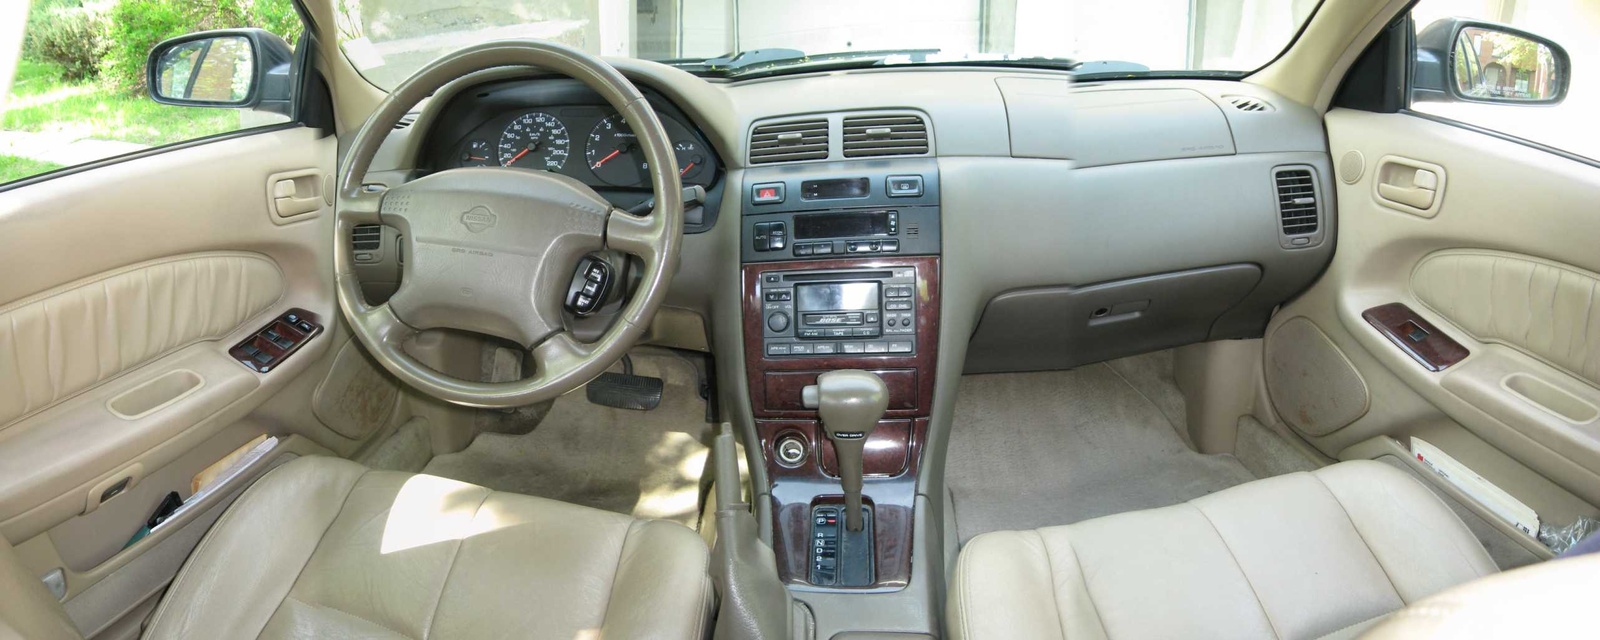 98 Nissan maxima interior #4